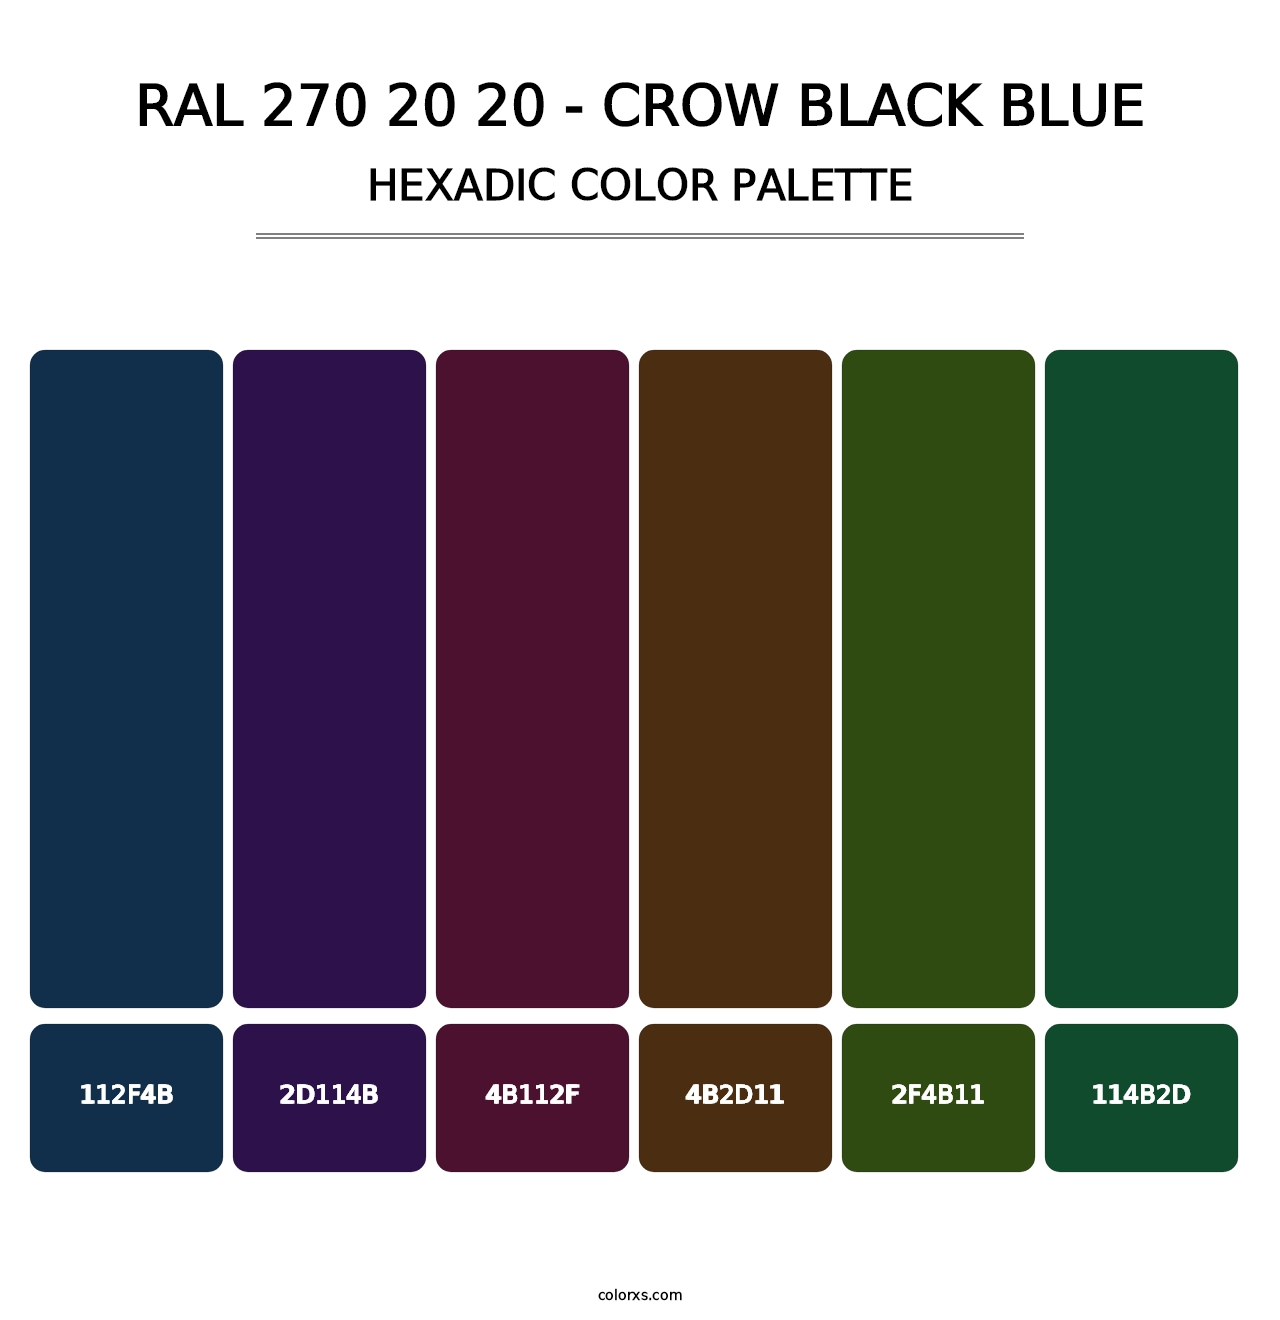 RAL 270 20 20 - Crow Black Blue - Hexadic Color Palette